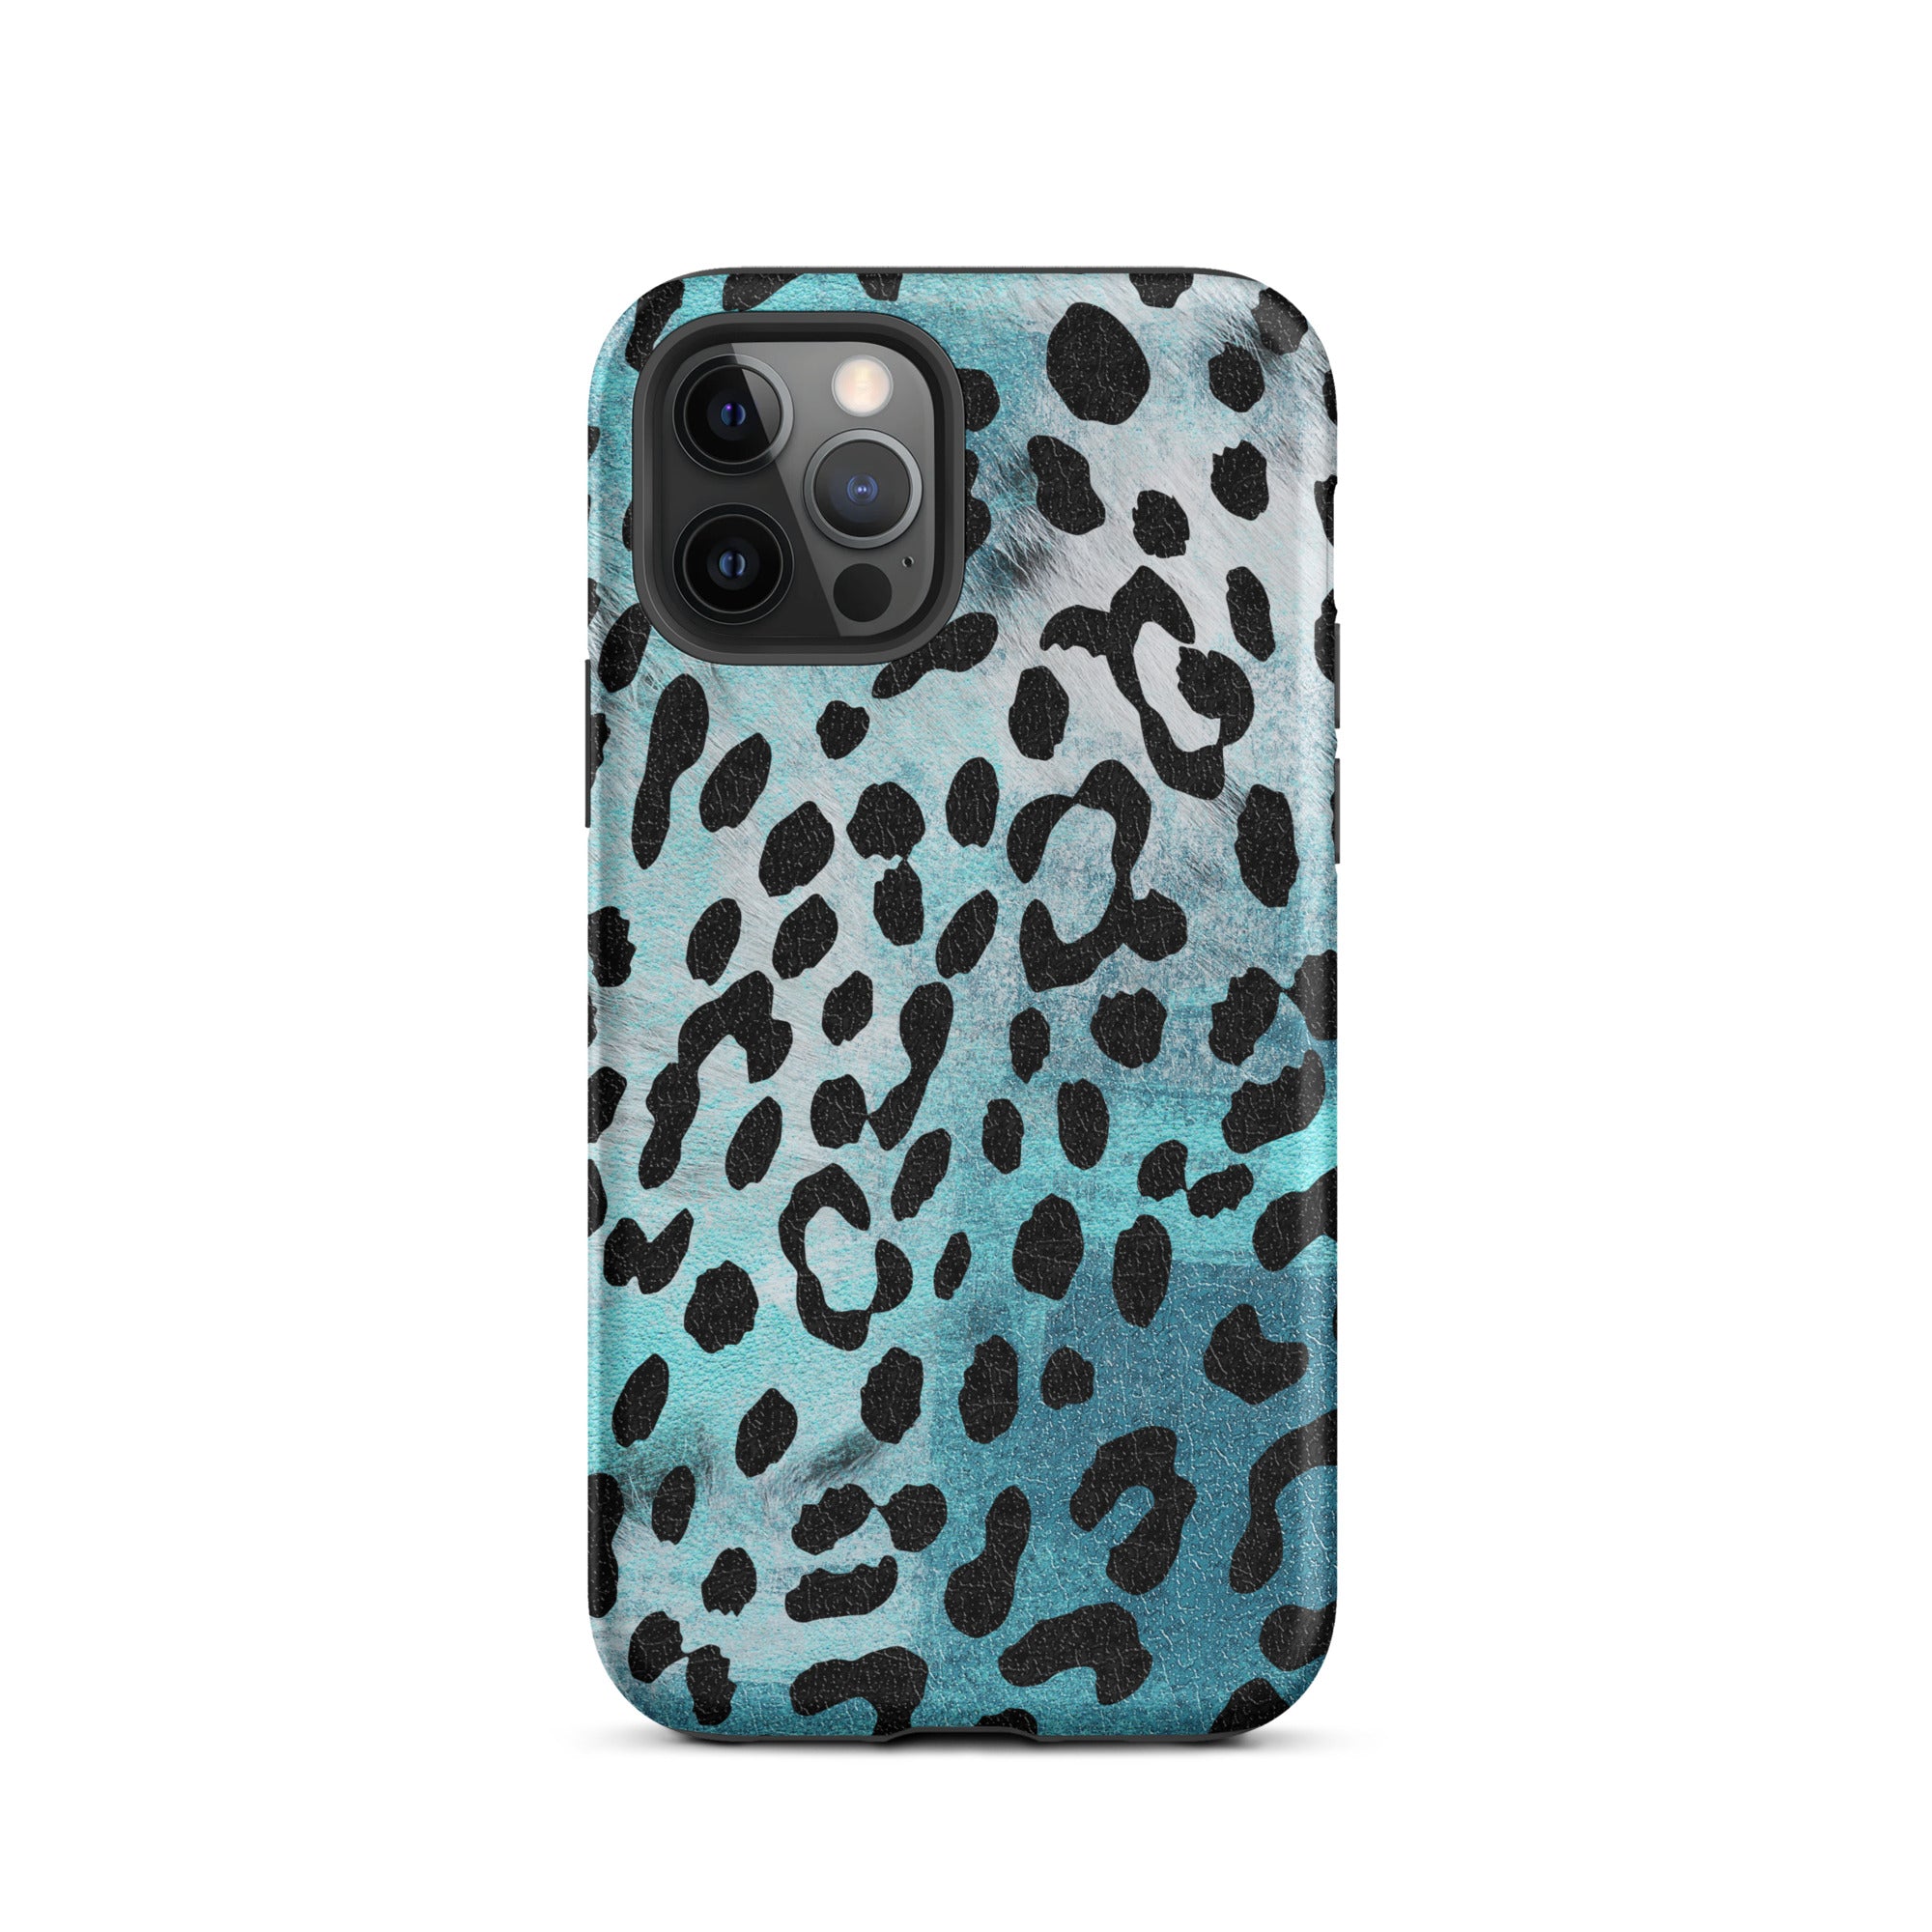 Tough Case for iPhone®- Safari Animal Print Design 02